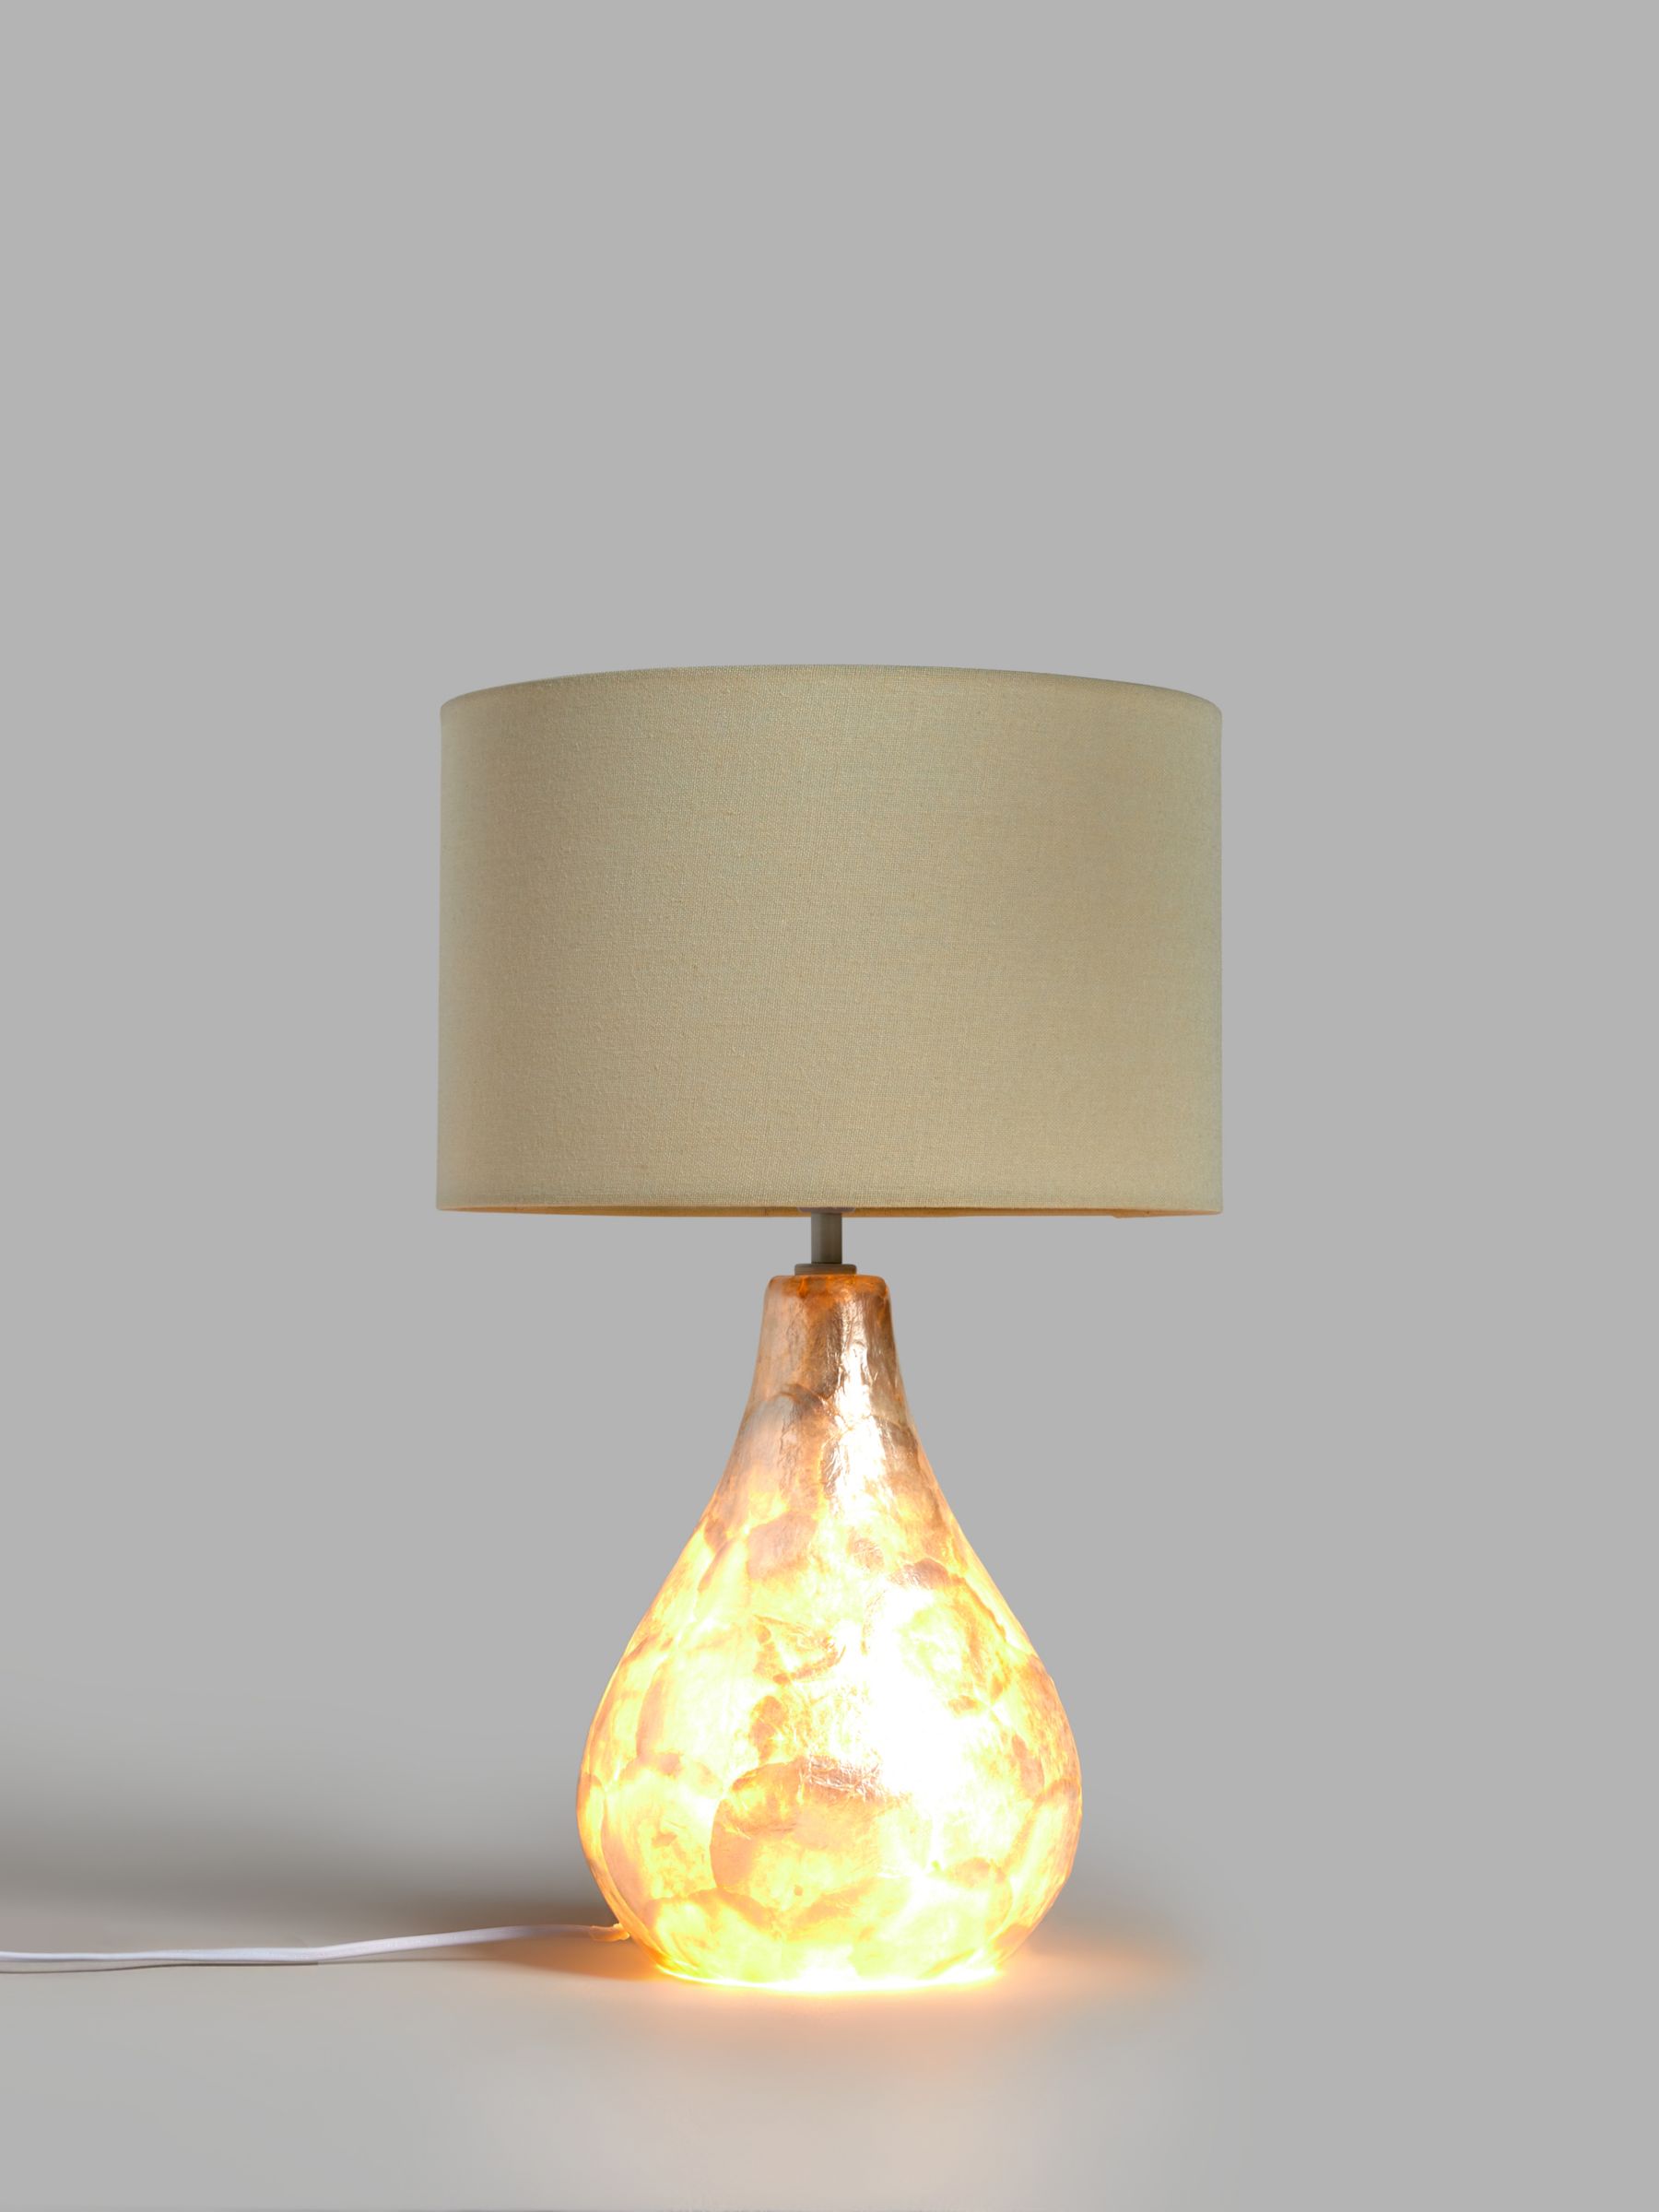 Pearl Dual Lit Capiz S Table Lamp, John Lewis Glass Table Lamp Shades